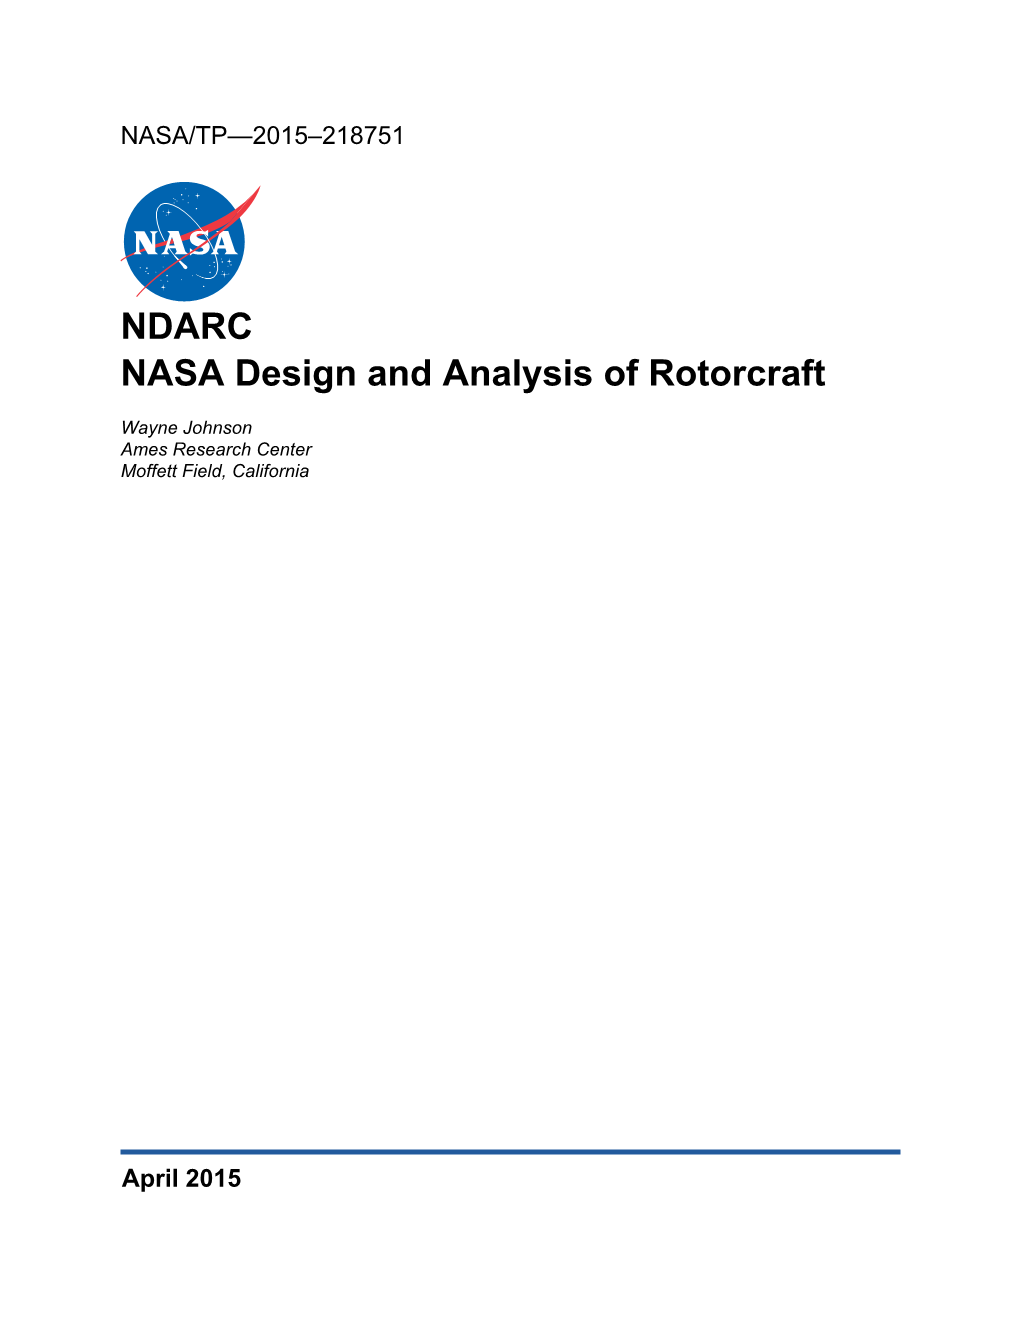 NDARC NASA Design and Analysis of Rotorcraft